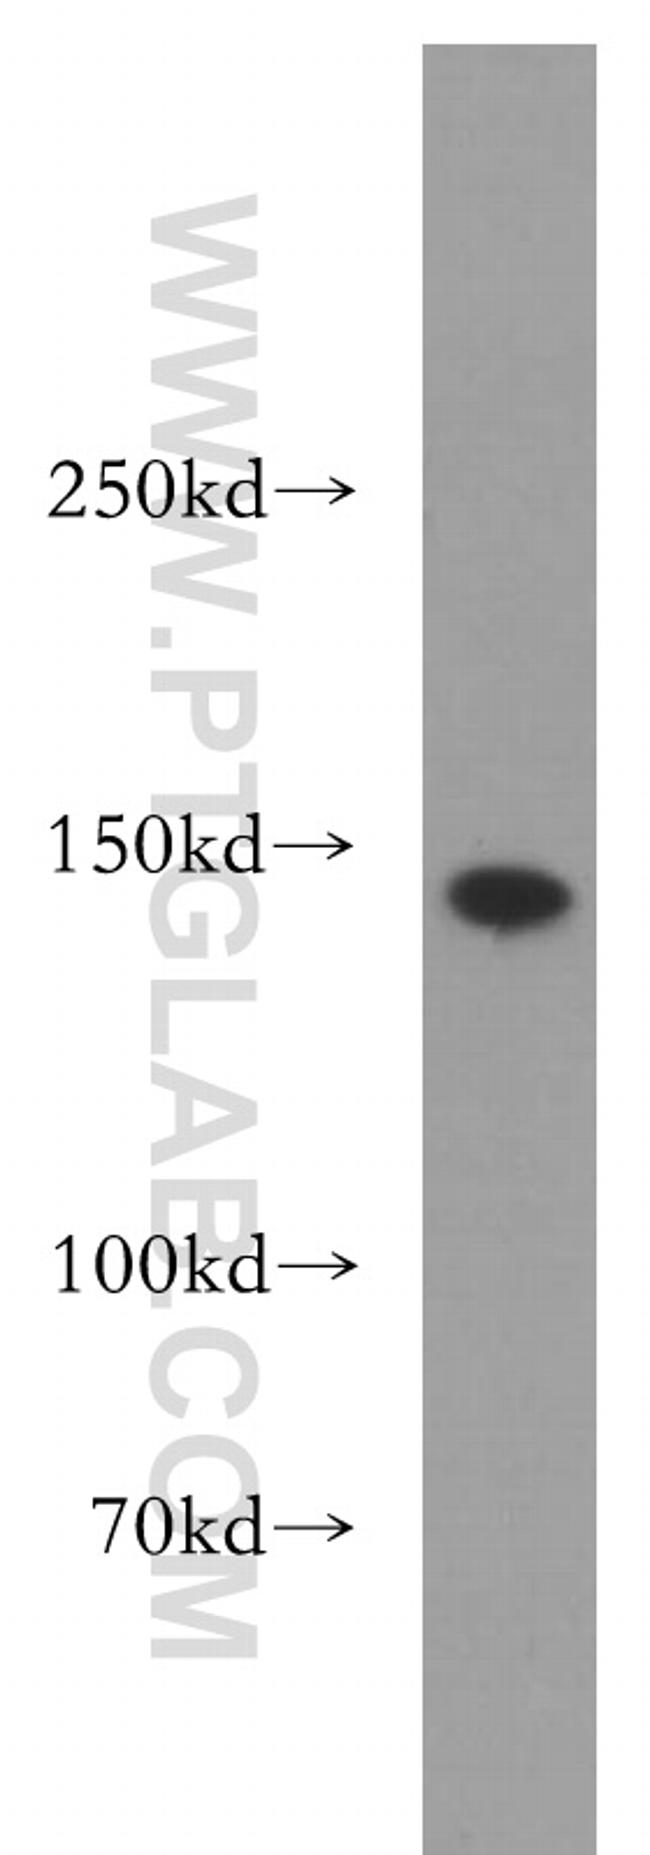 SMC3 Antibody in Western Blot (WB)